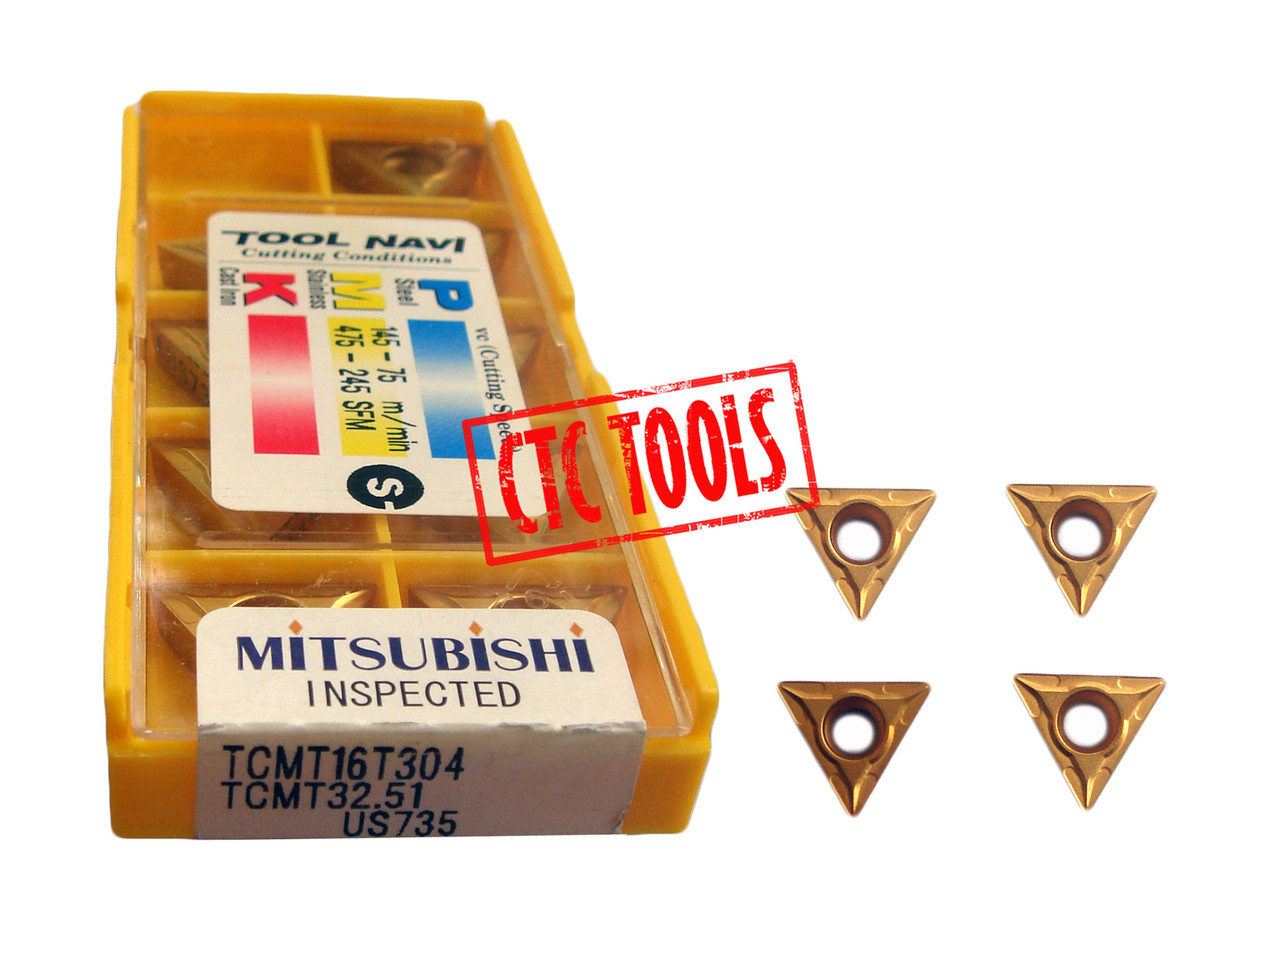 MITSUBISHI TCMT16T304 US735 TCMT32.51 Carbide Inserts 10pcs New Free Shipping 